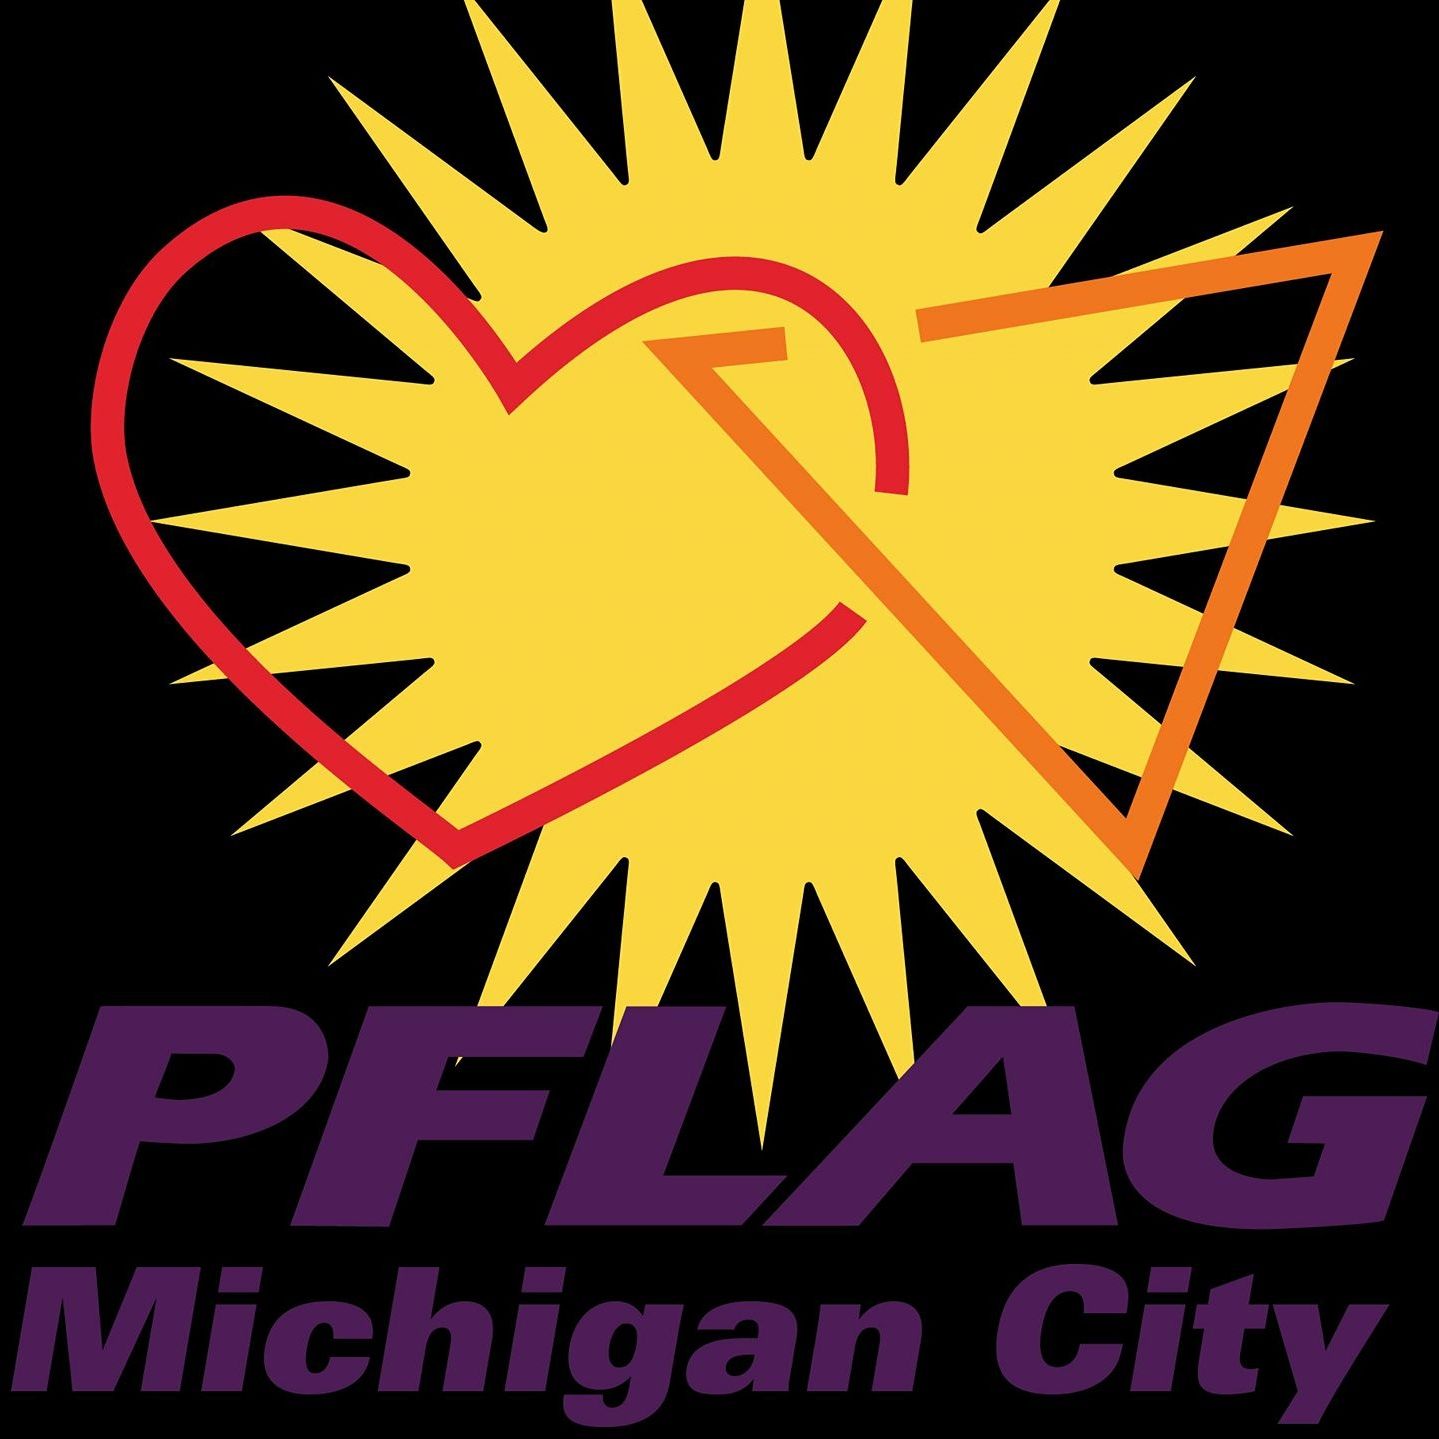 LGBTQ Organizations in Indianapolis Indiana - PFLAG Michigan City